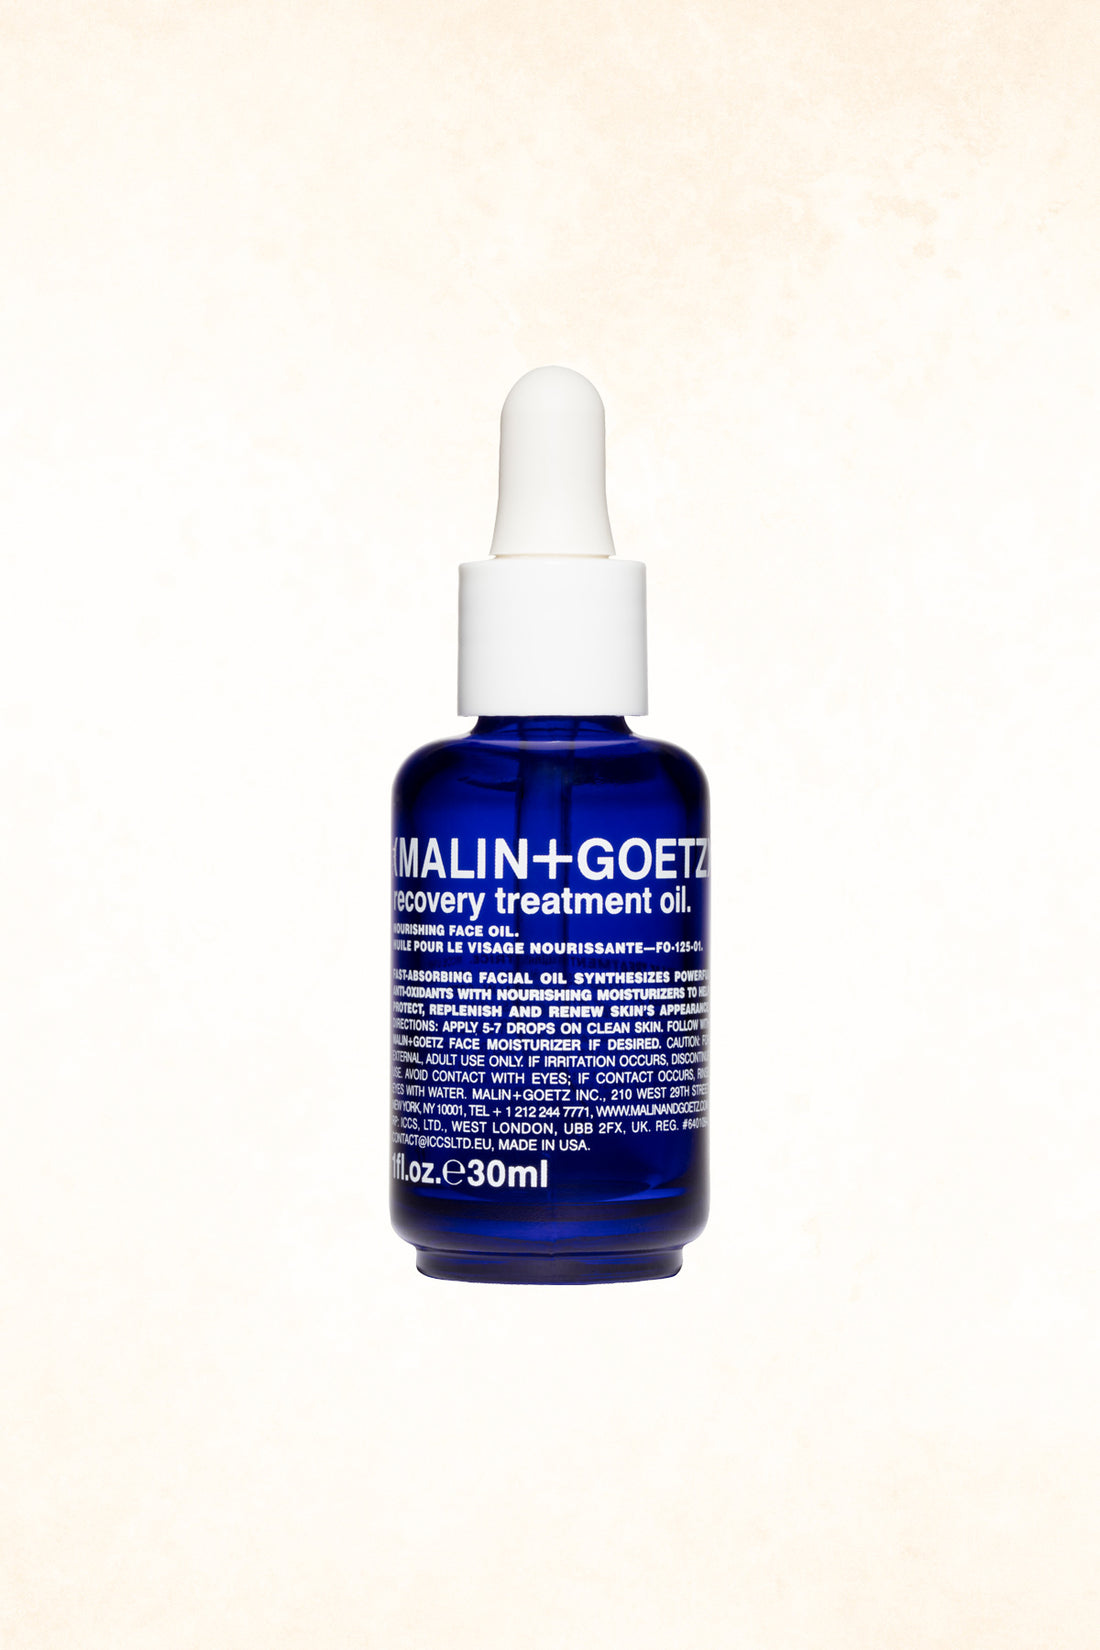 Malin+Goetz – Recovery Treatment Oil 1 oz / 30 ml